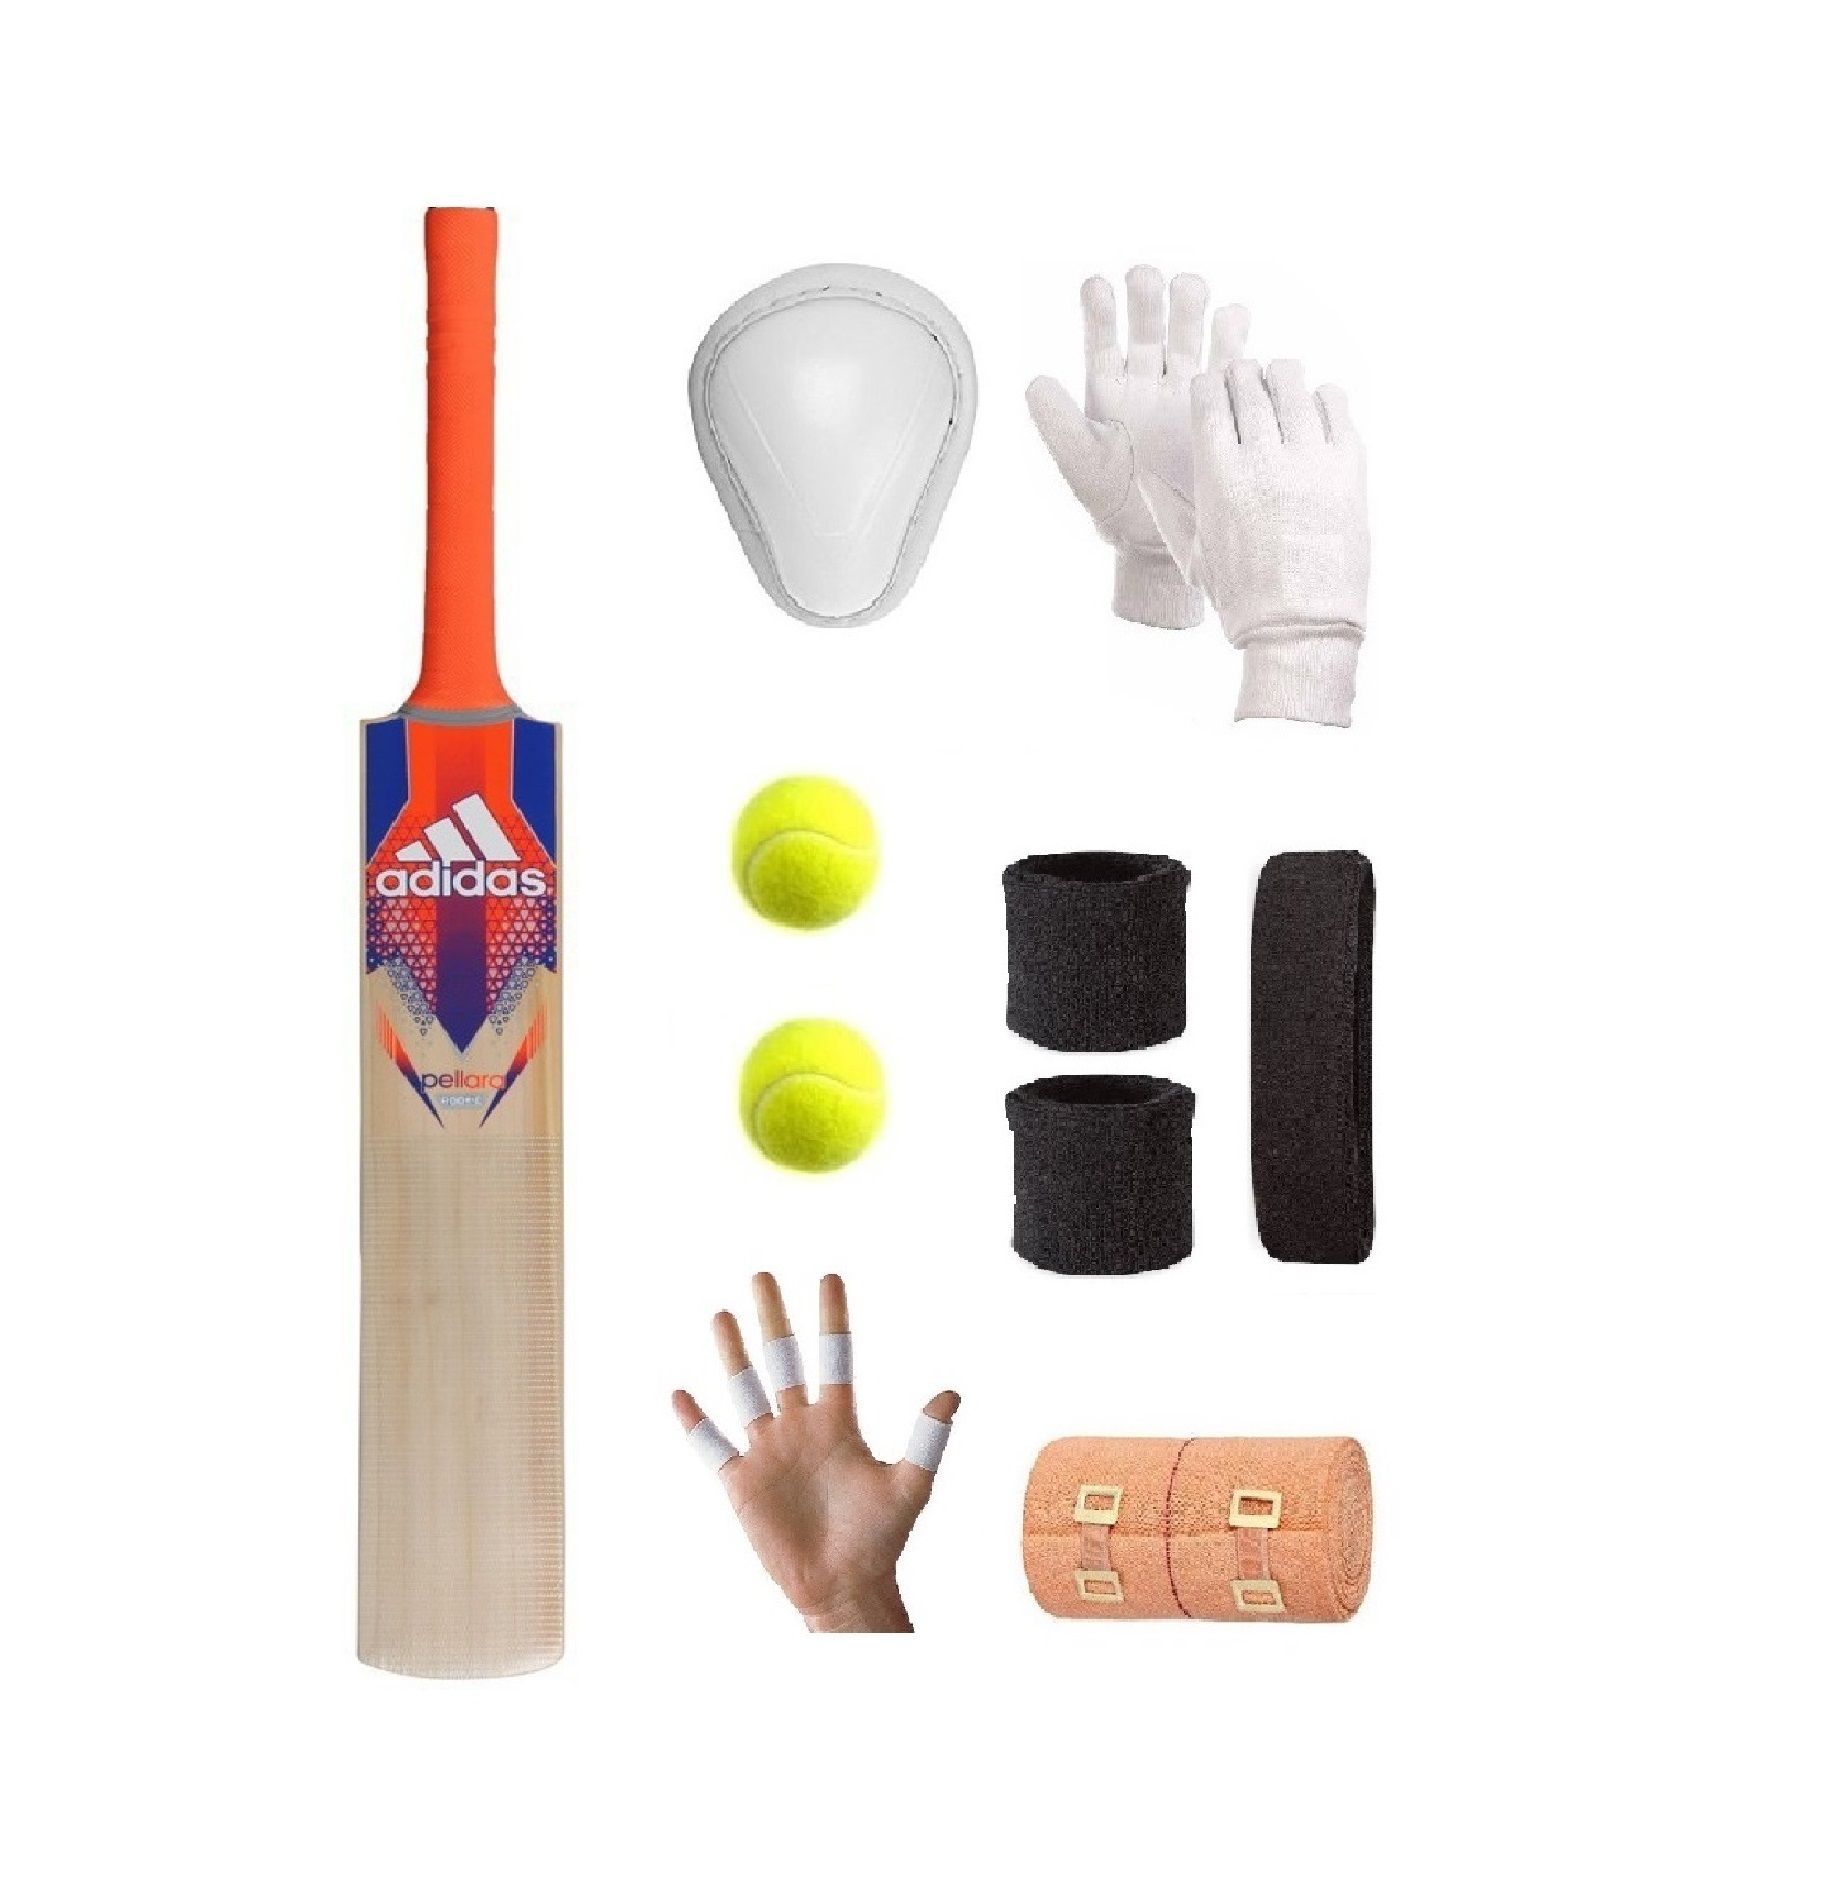 adidas full cricket kit